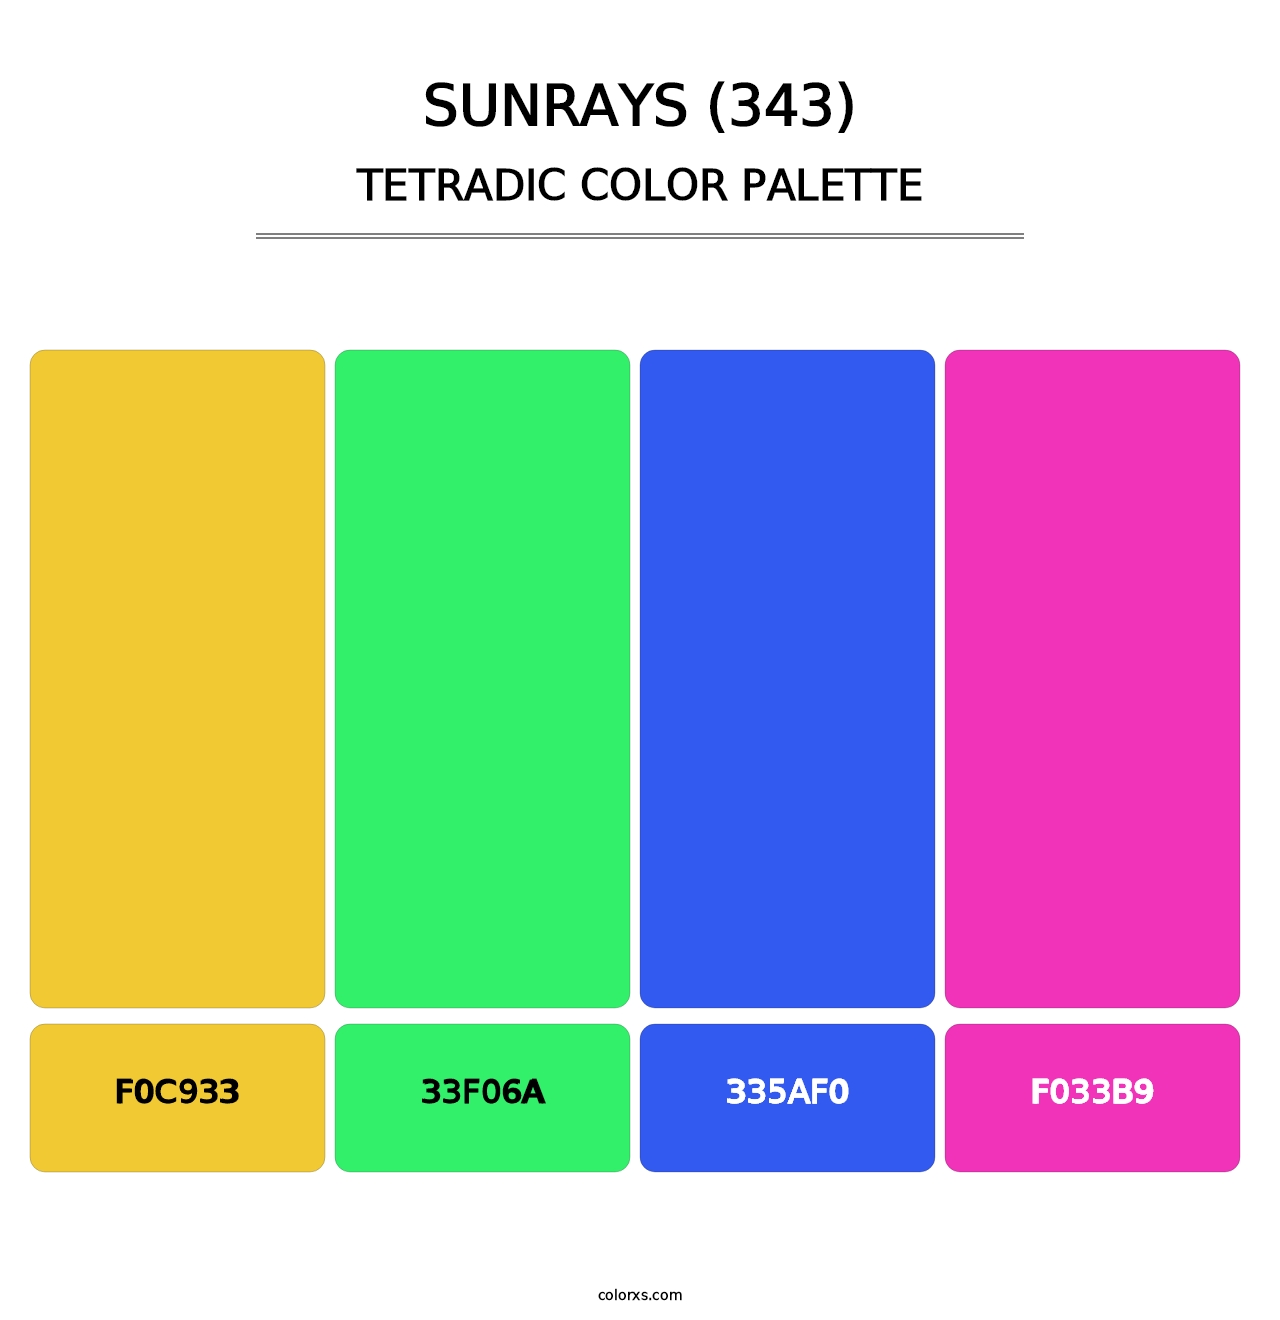 Sunrays (343) - Tetradic Color Palette